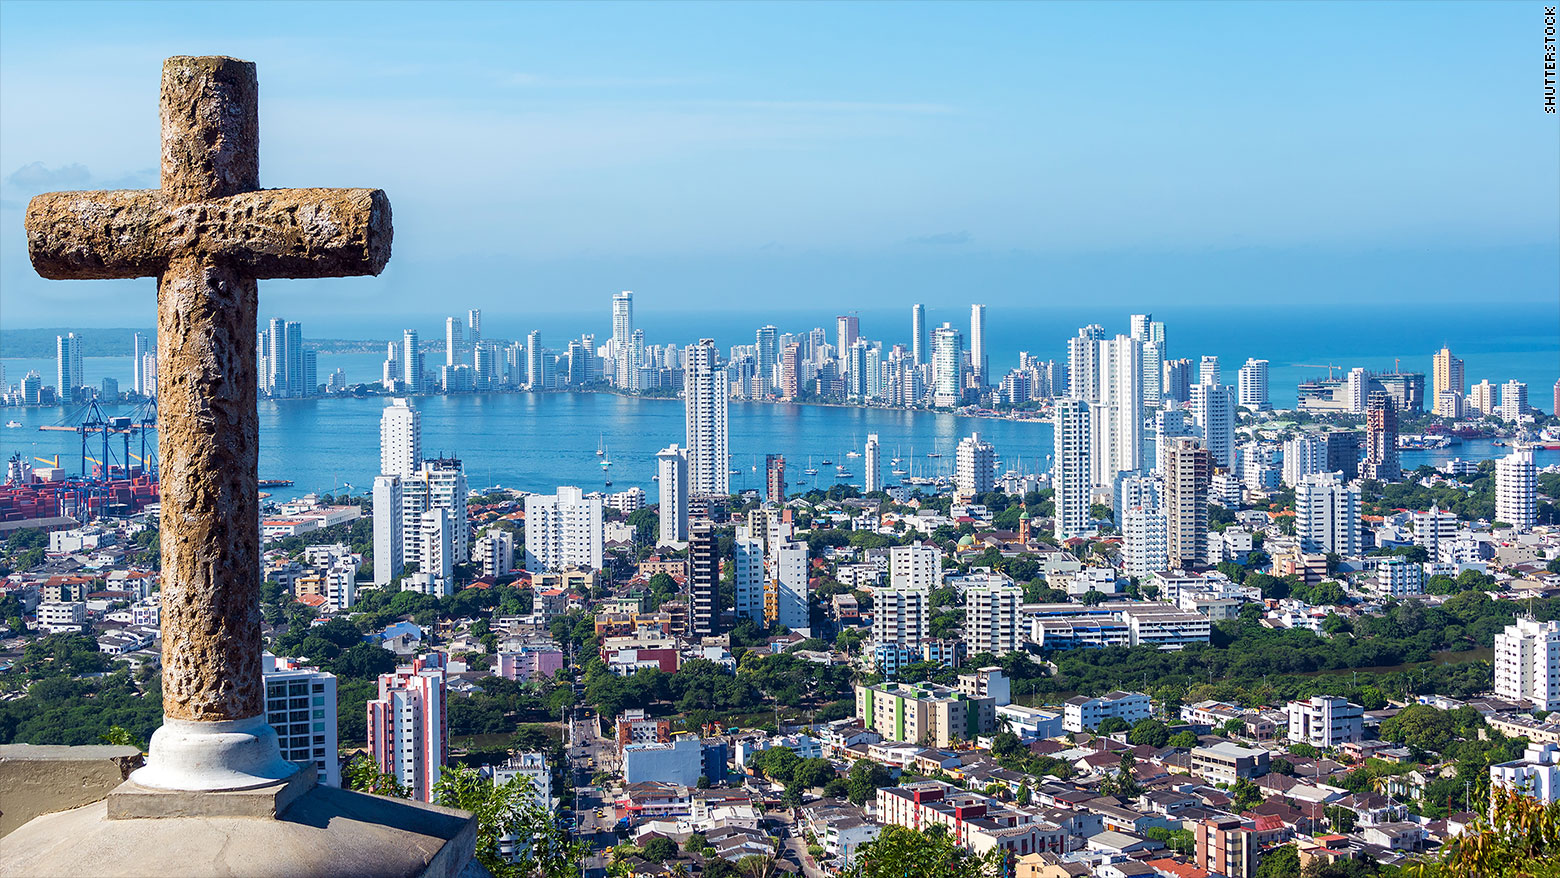 The skyline of Cartagena, Colombia. (Photo credit: http://money.cnn.com)